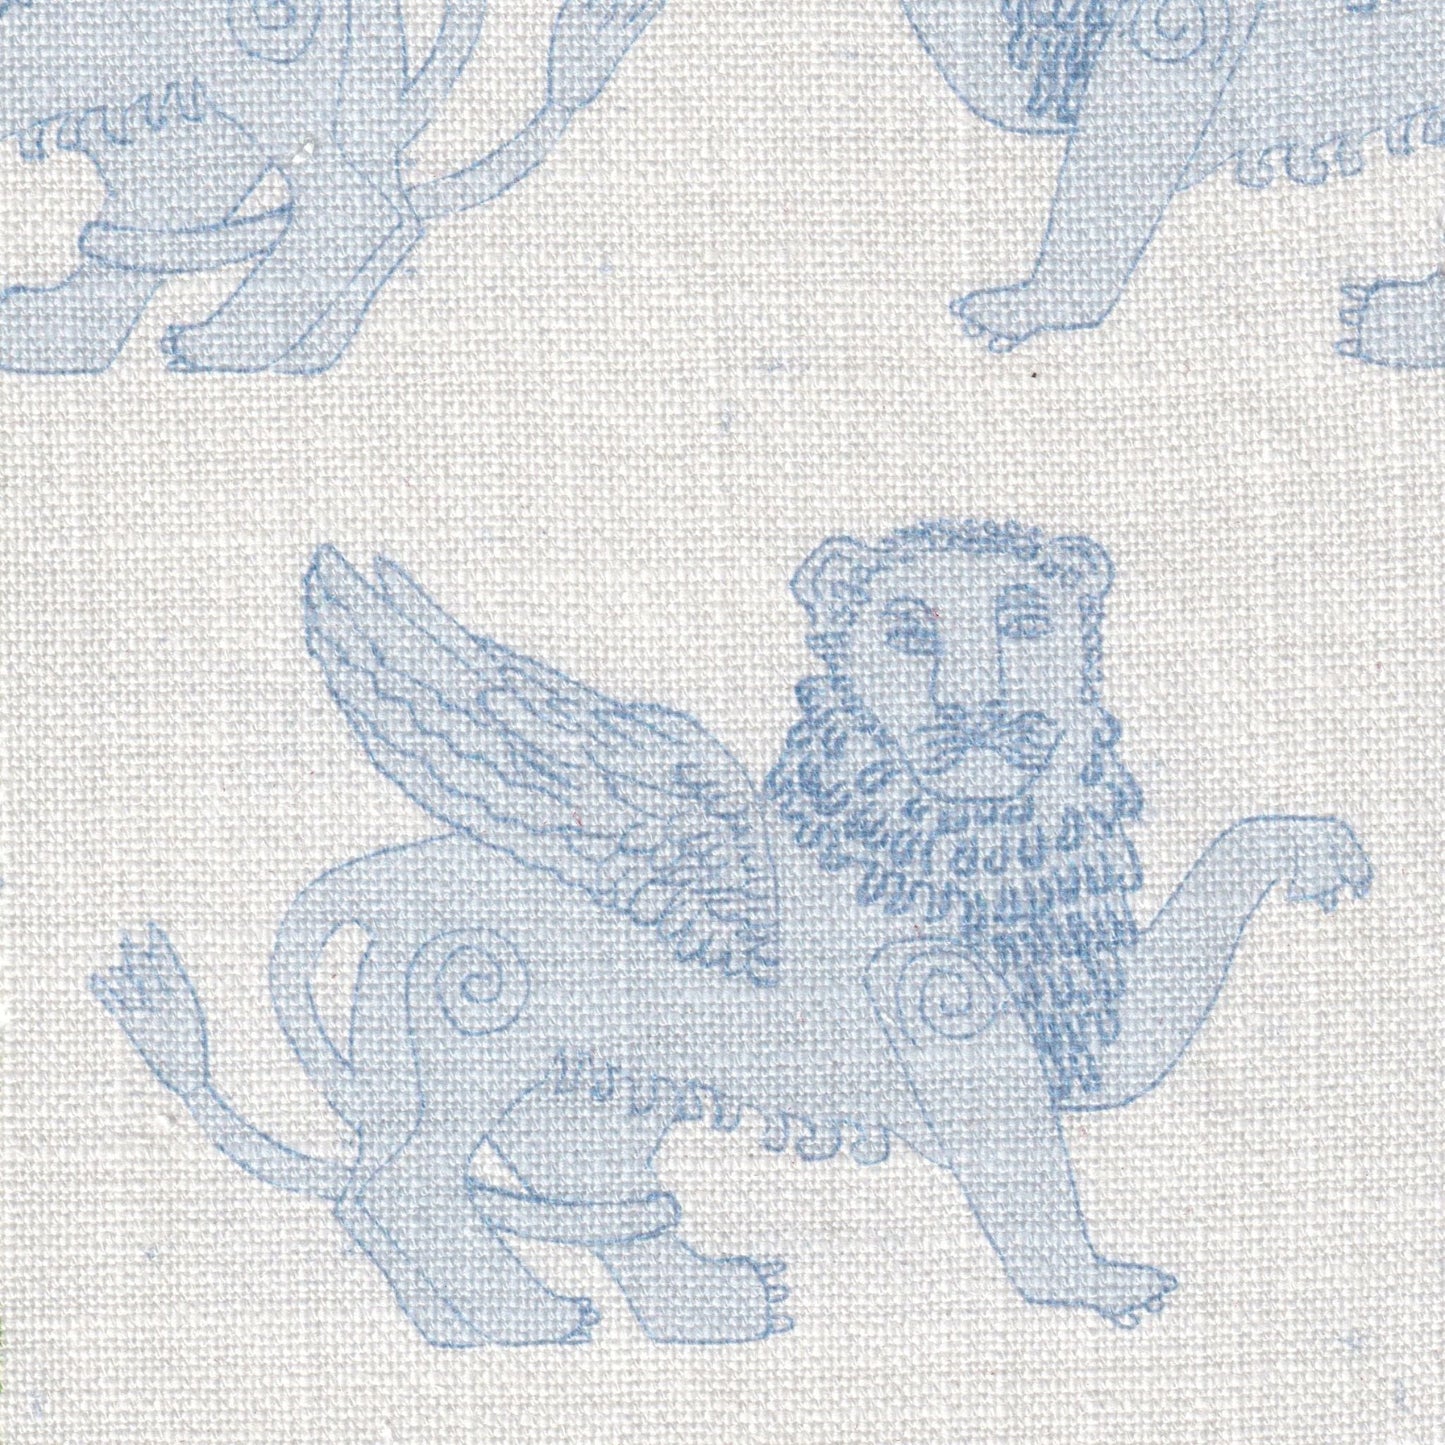 LINEN SAMPLE - Small scale repeat Winged Lion Linen - Delft Blue